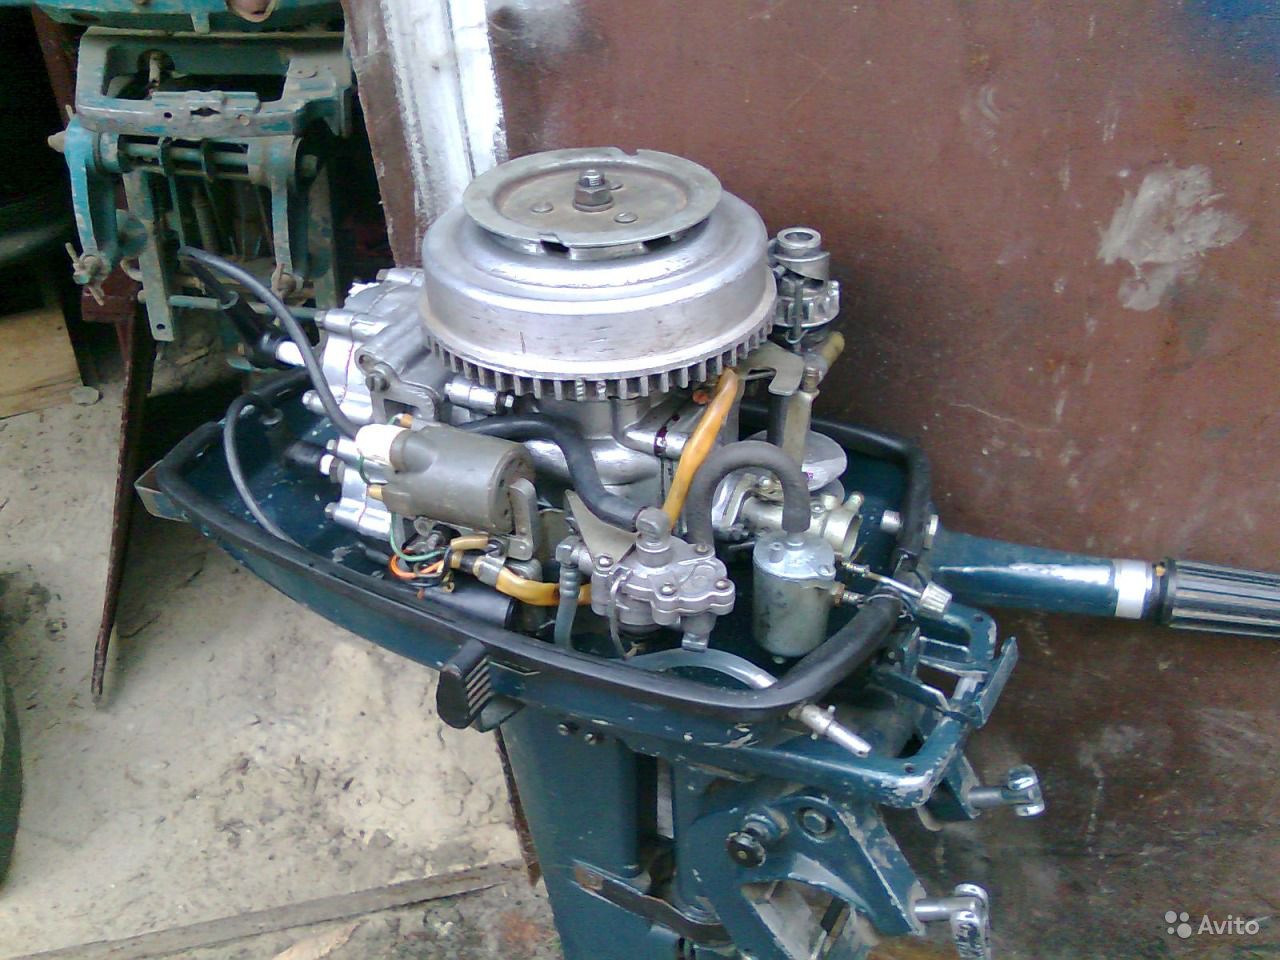 мотор Ветерок-12